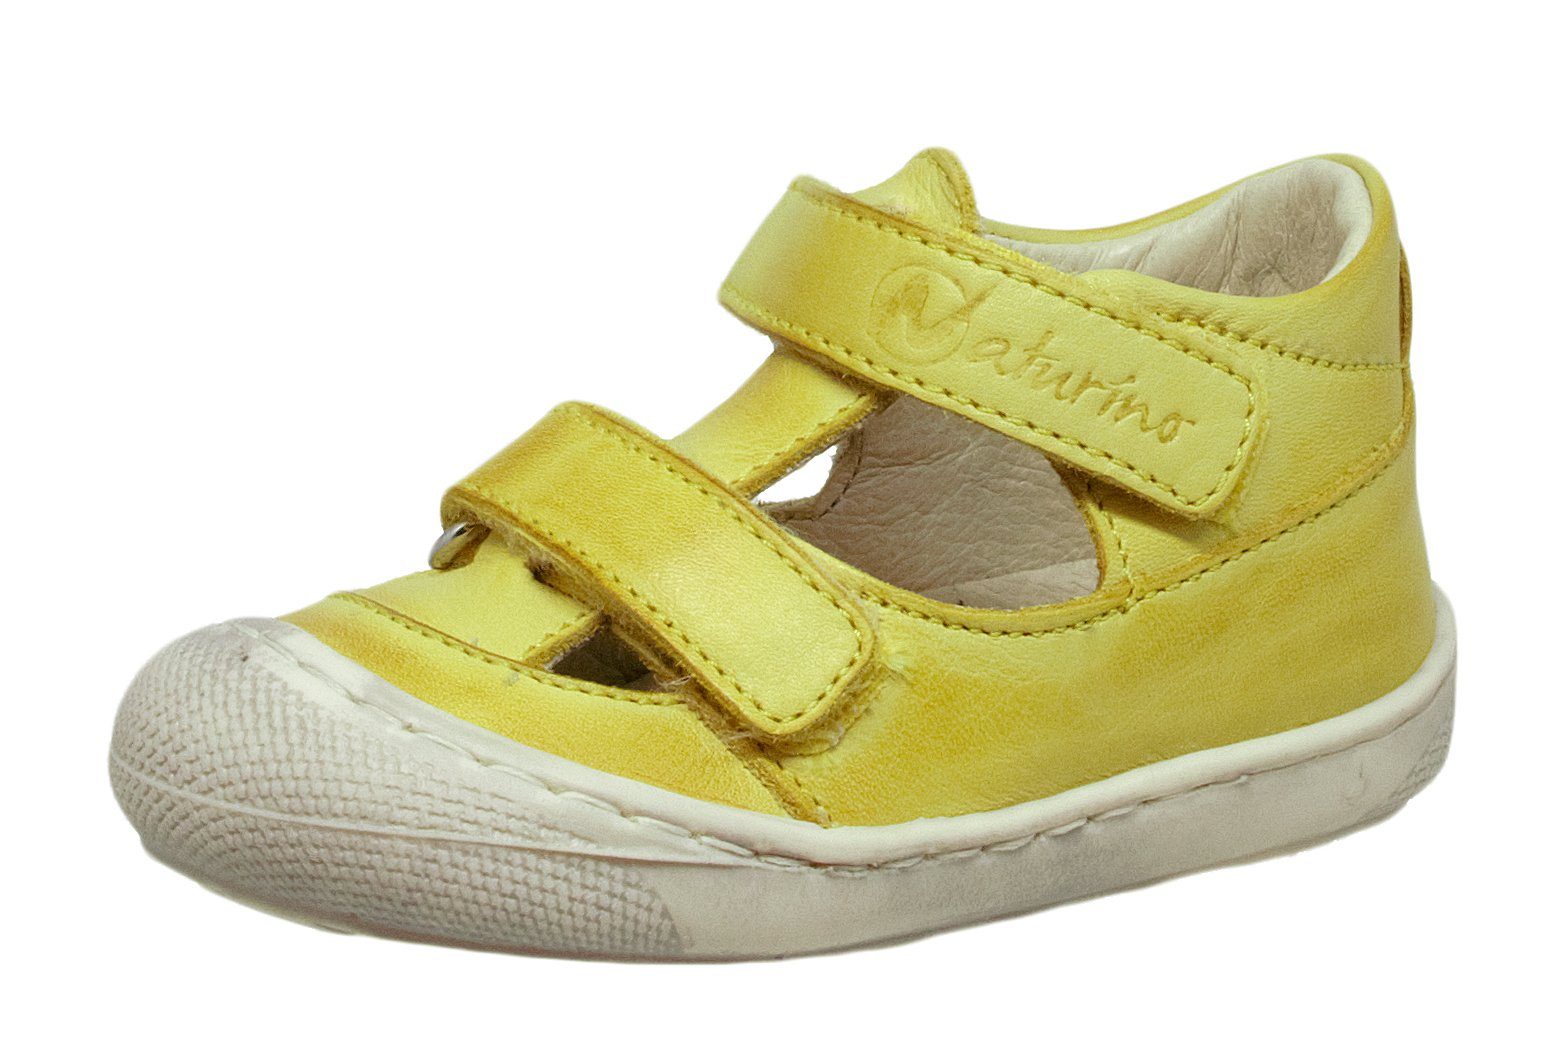 Sandalette Baby Lauflernschuhe Puffy Naturino Naturino Yellow Gelb Klett Sandalen